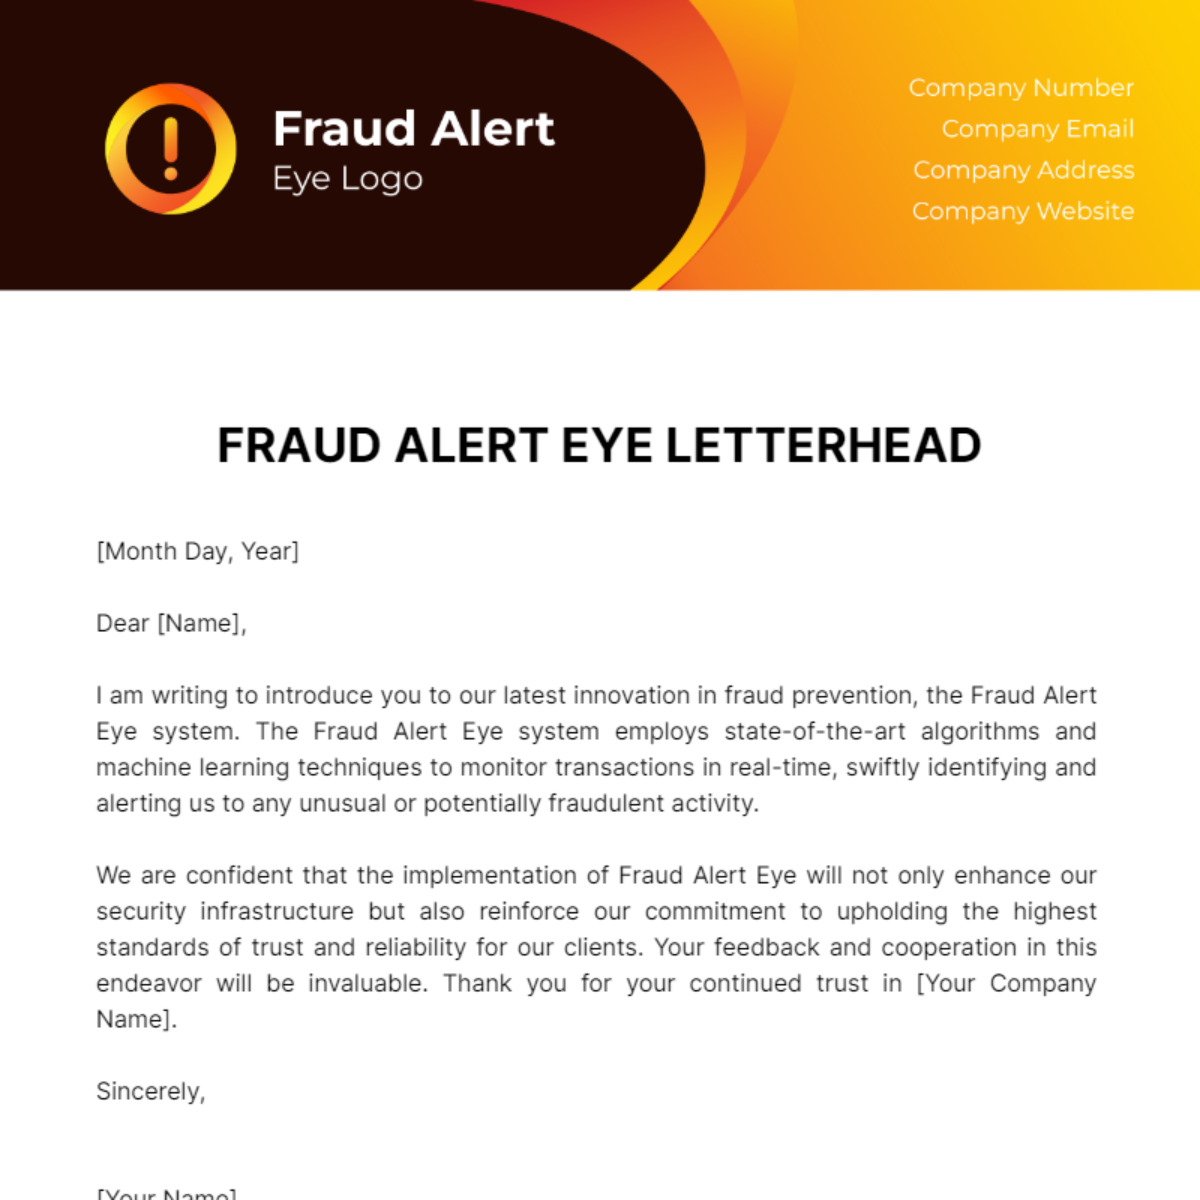 Free Fraud Alert Eye Letterhead Template